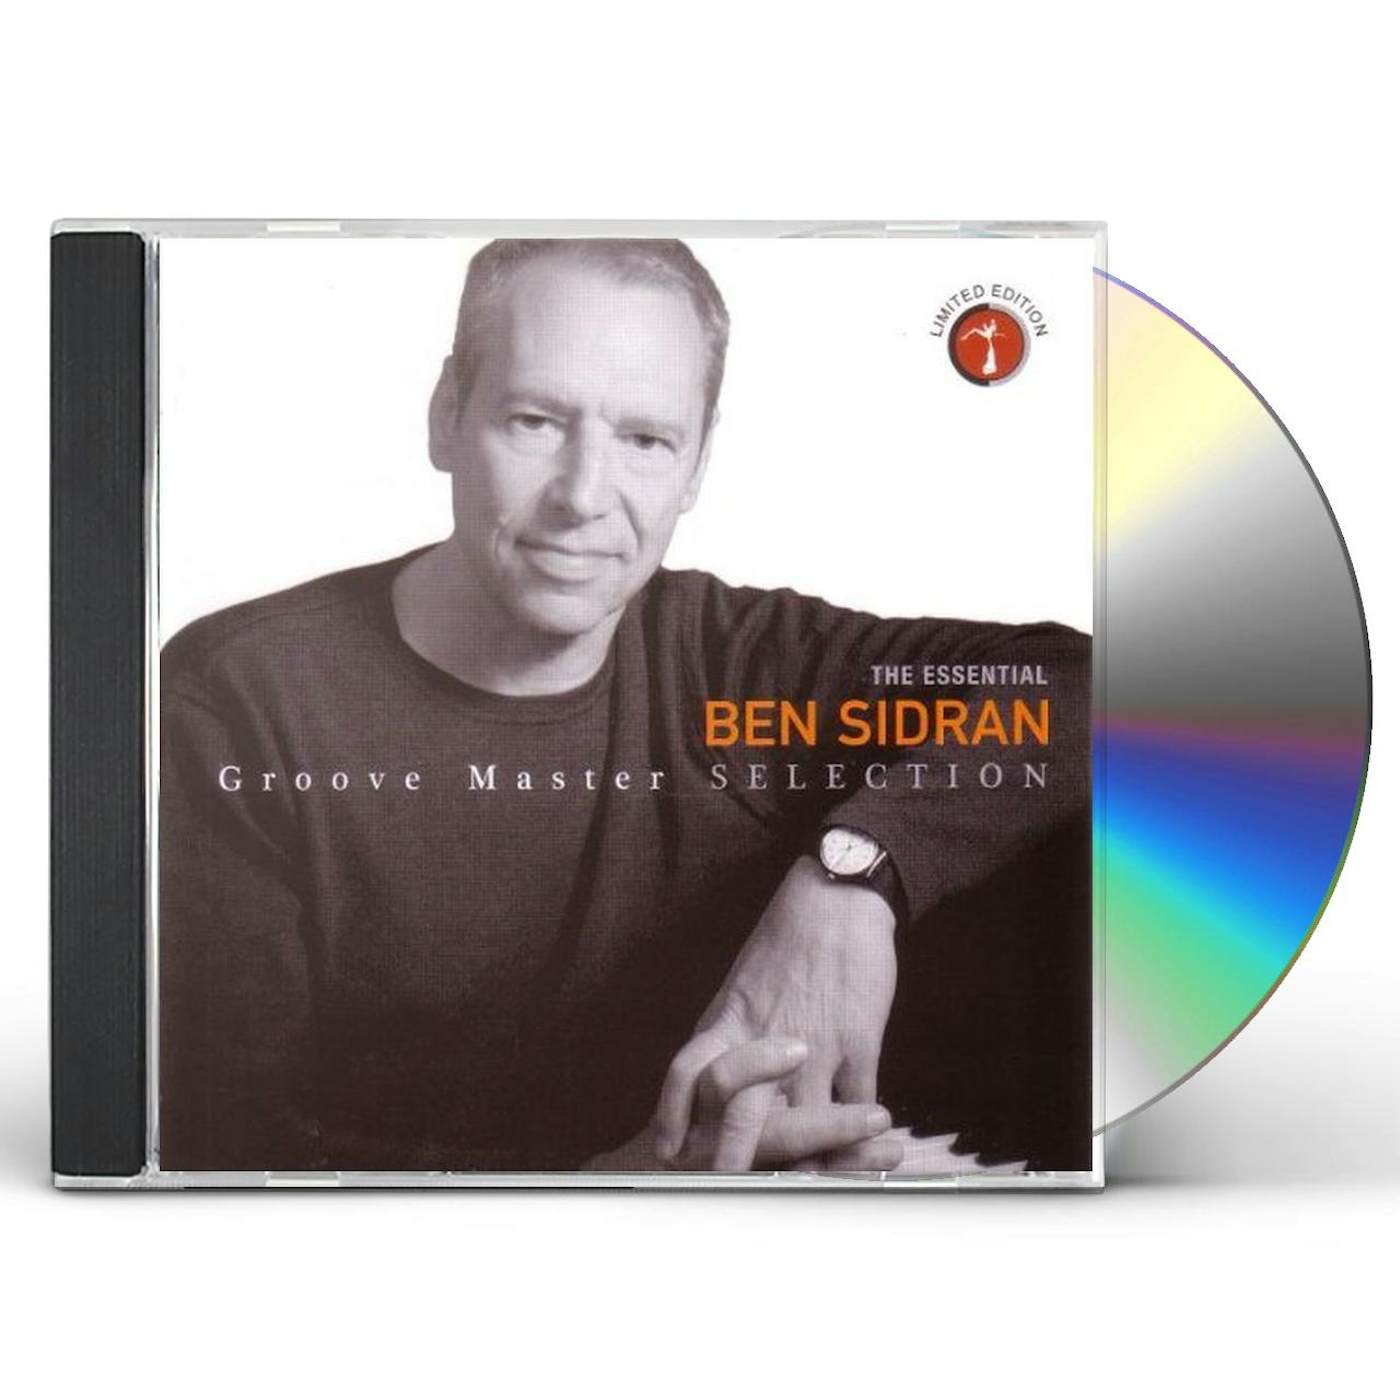 Ben Sidran ESSENTIAL CD